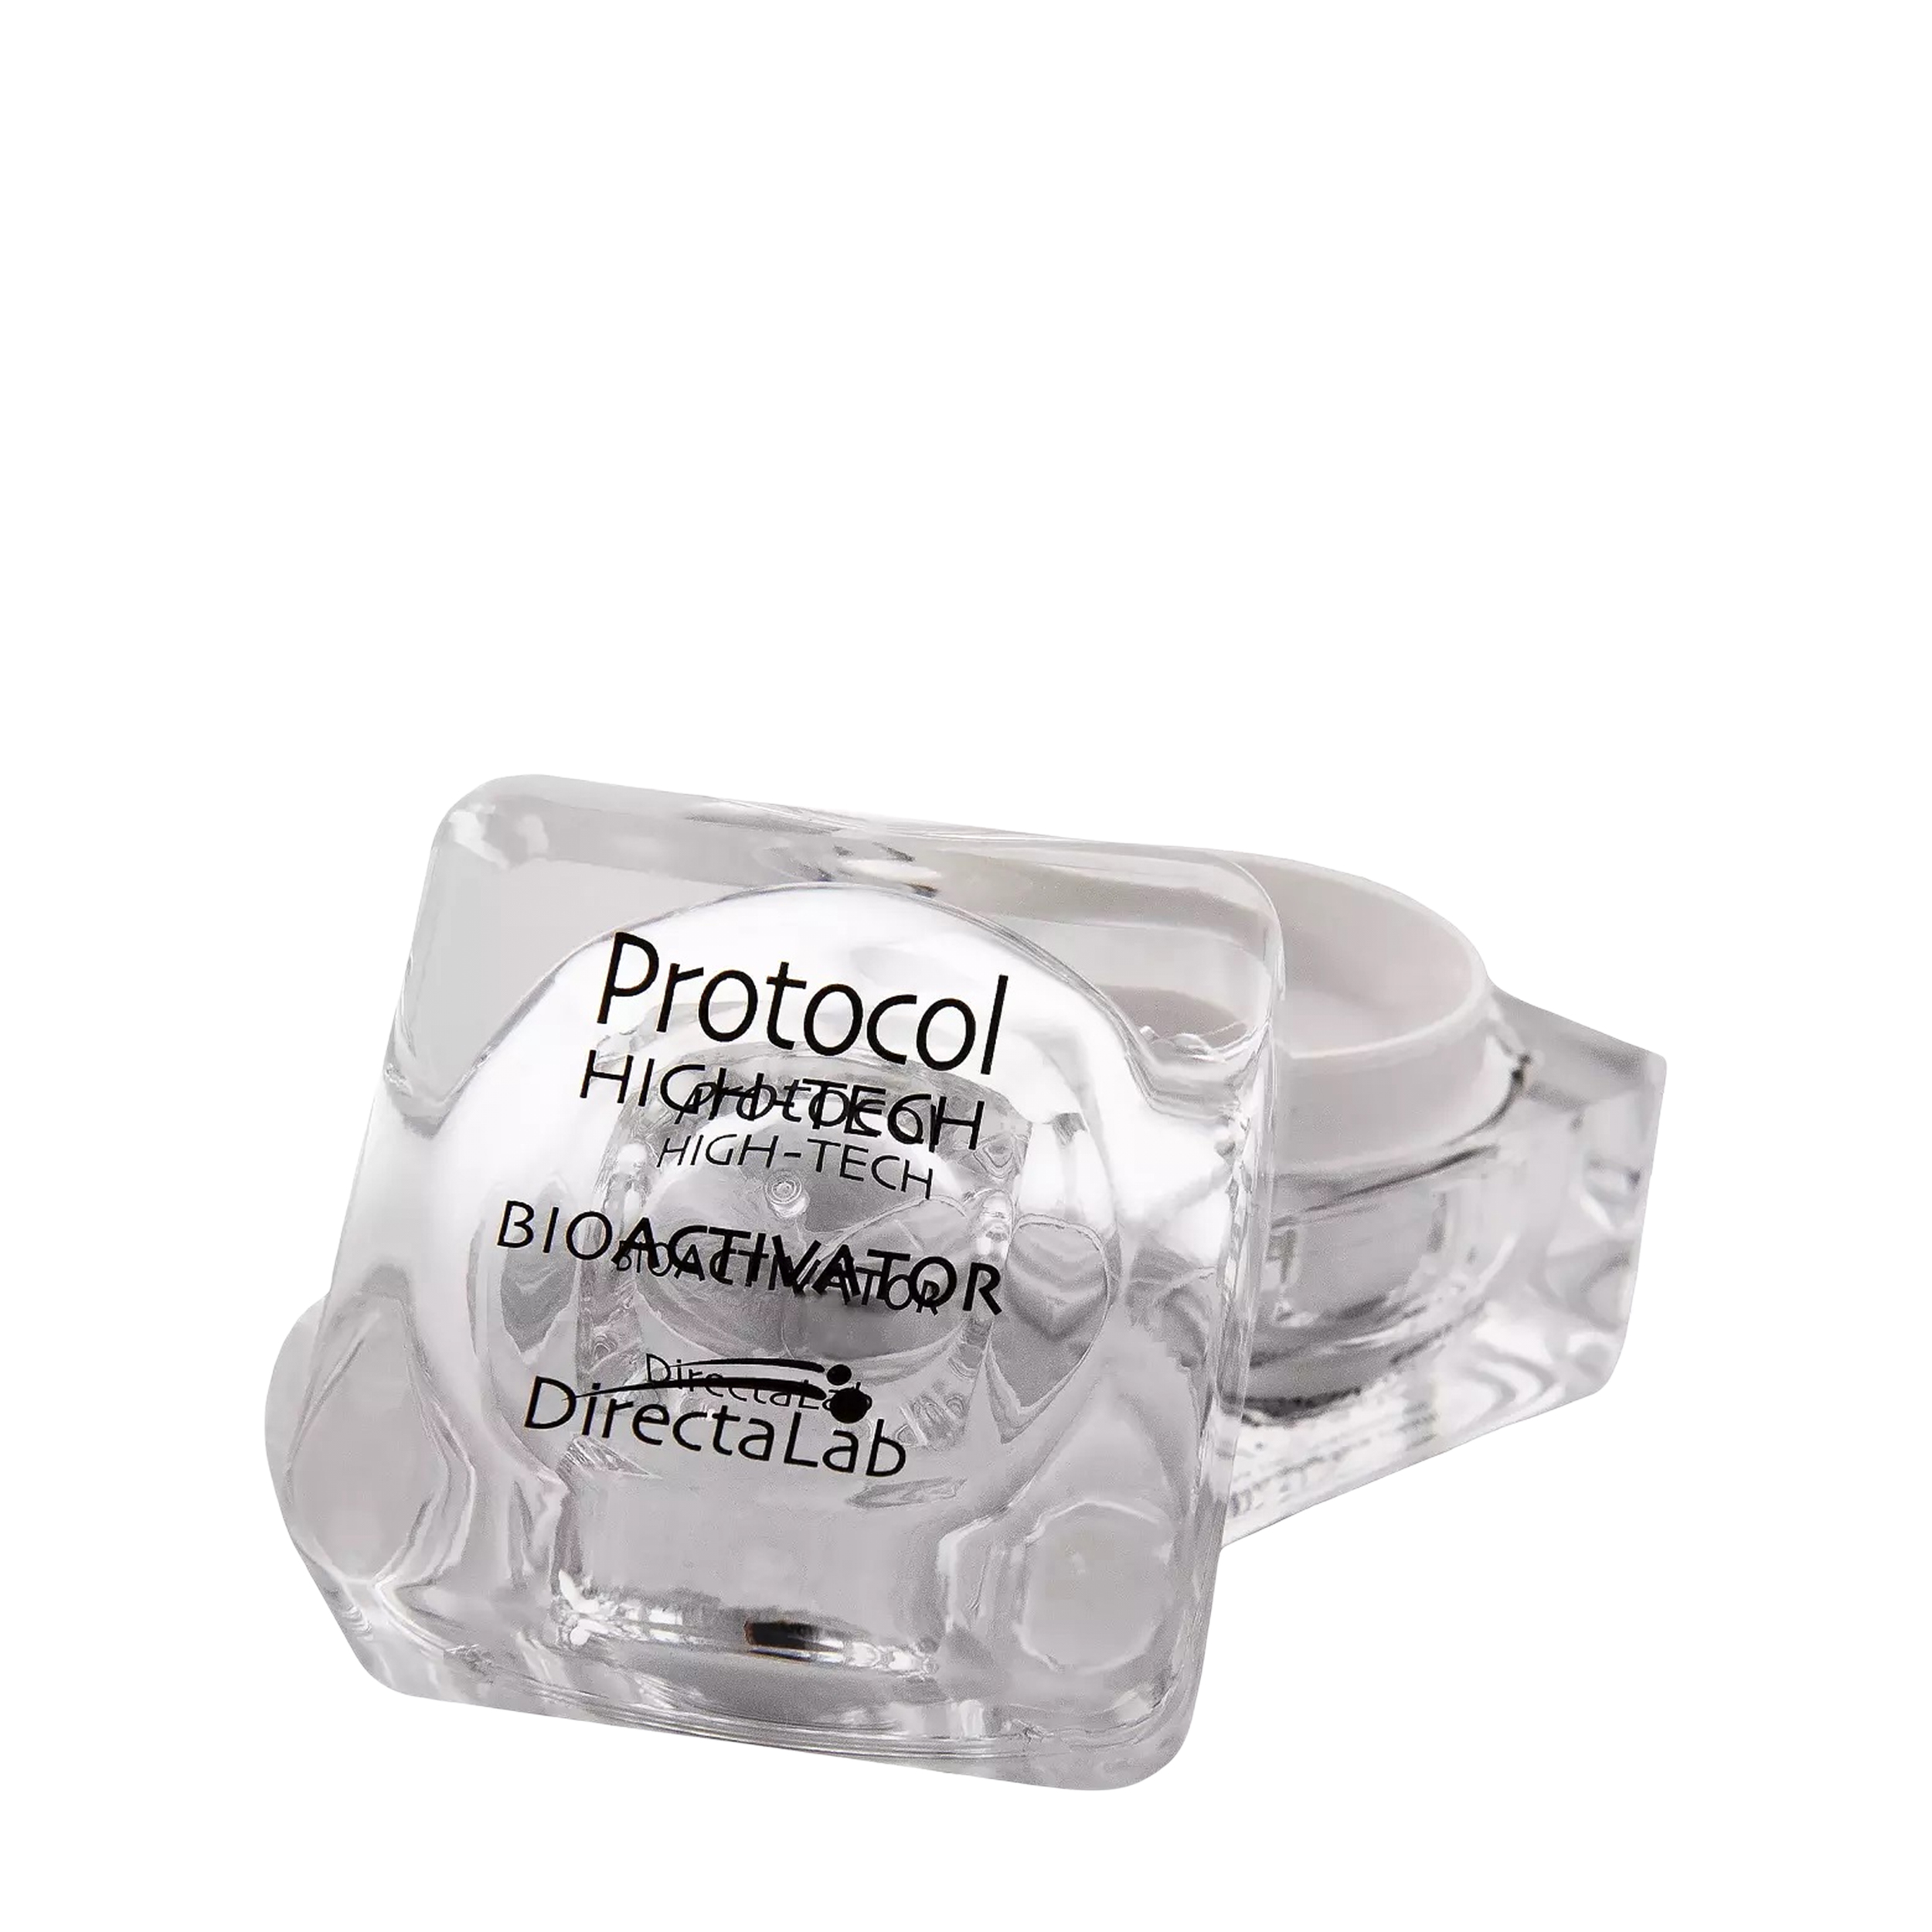 Directalab Directalab Антивозрастной крем-биоактиватор для лица Protocol High-Tech Bioactivator 30 мл 000399N_DL - фото 1